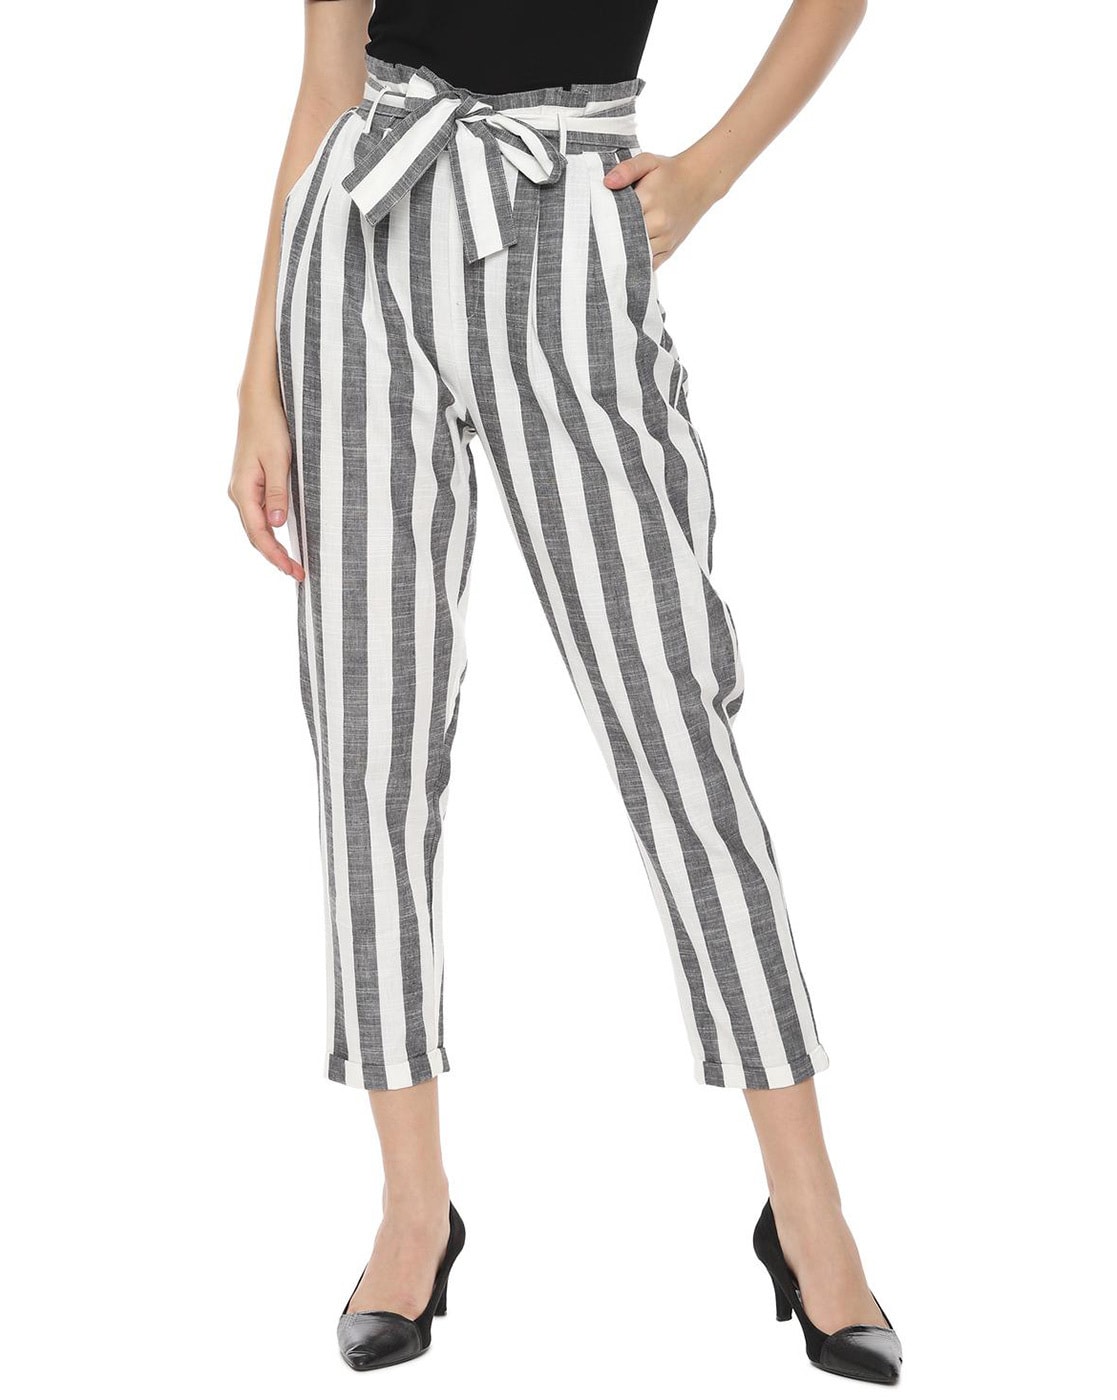 Buy Grey Black Striped Cotton Pants  MTSEGREYTHINSTRIPEPANTMATI16MAR   The loom